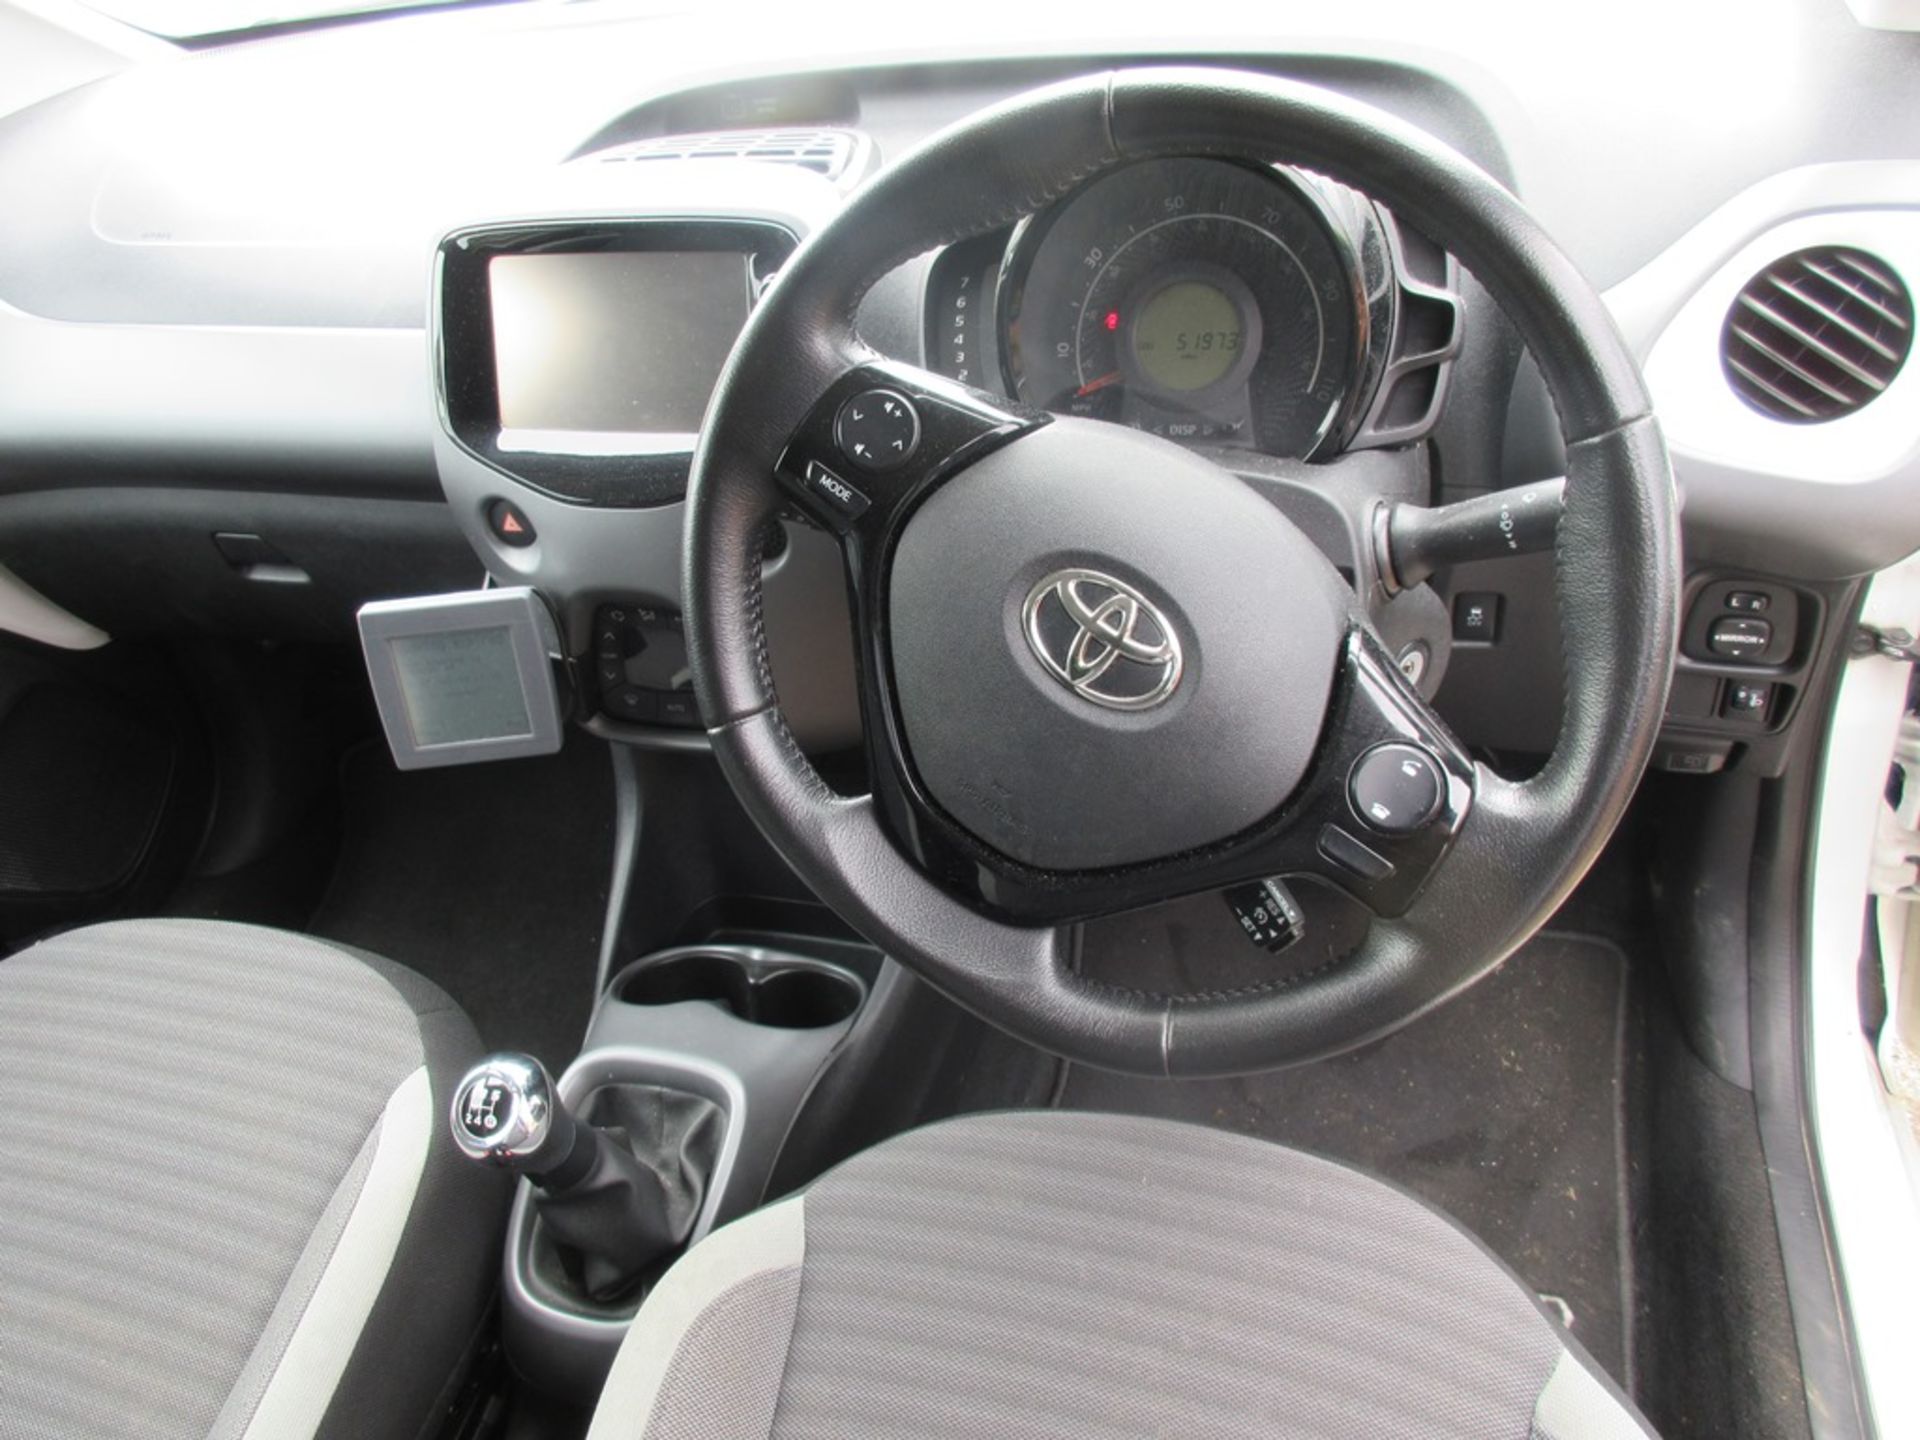 Toyota Aygo X-Plore Vvt-I petrol hatchback, 68bhp Registration: WF68 YBD Recorded mileage: 51,973 - Image 13 of 14